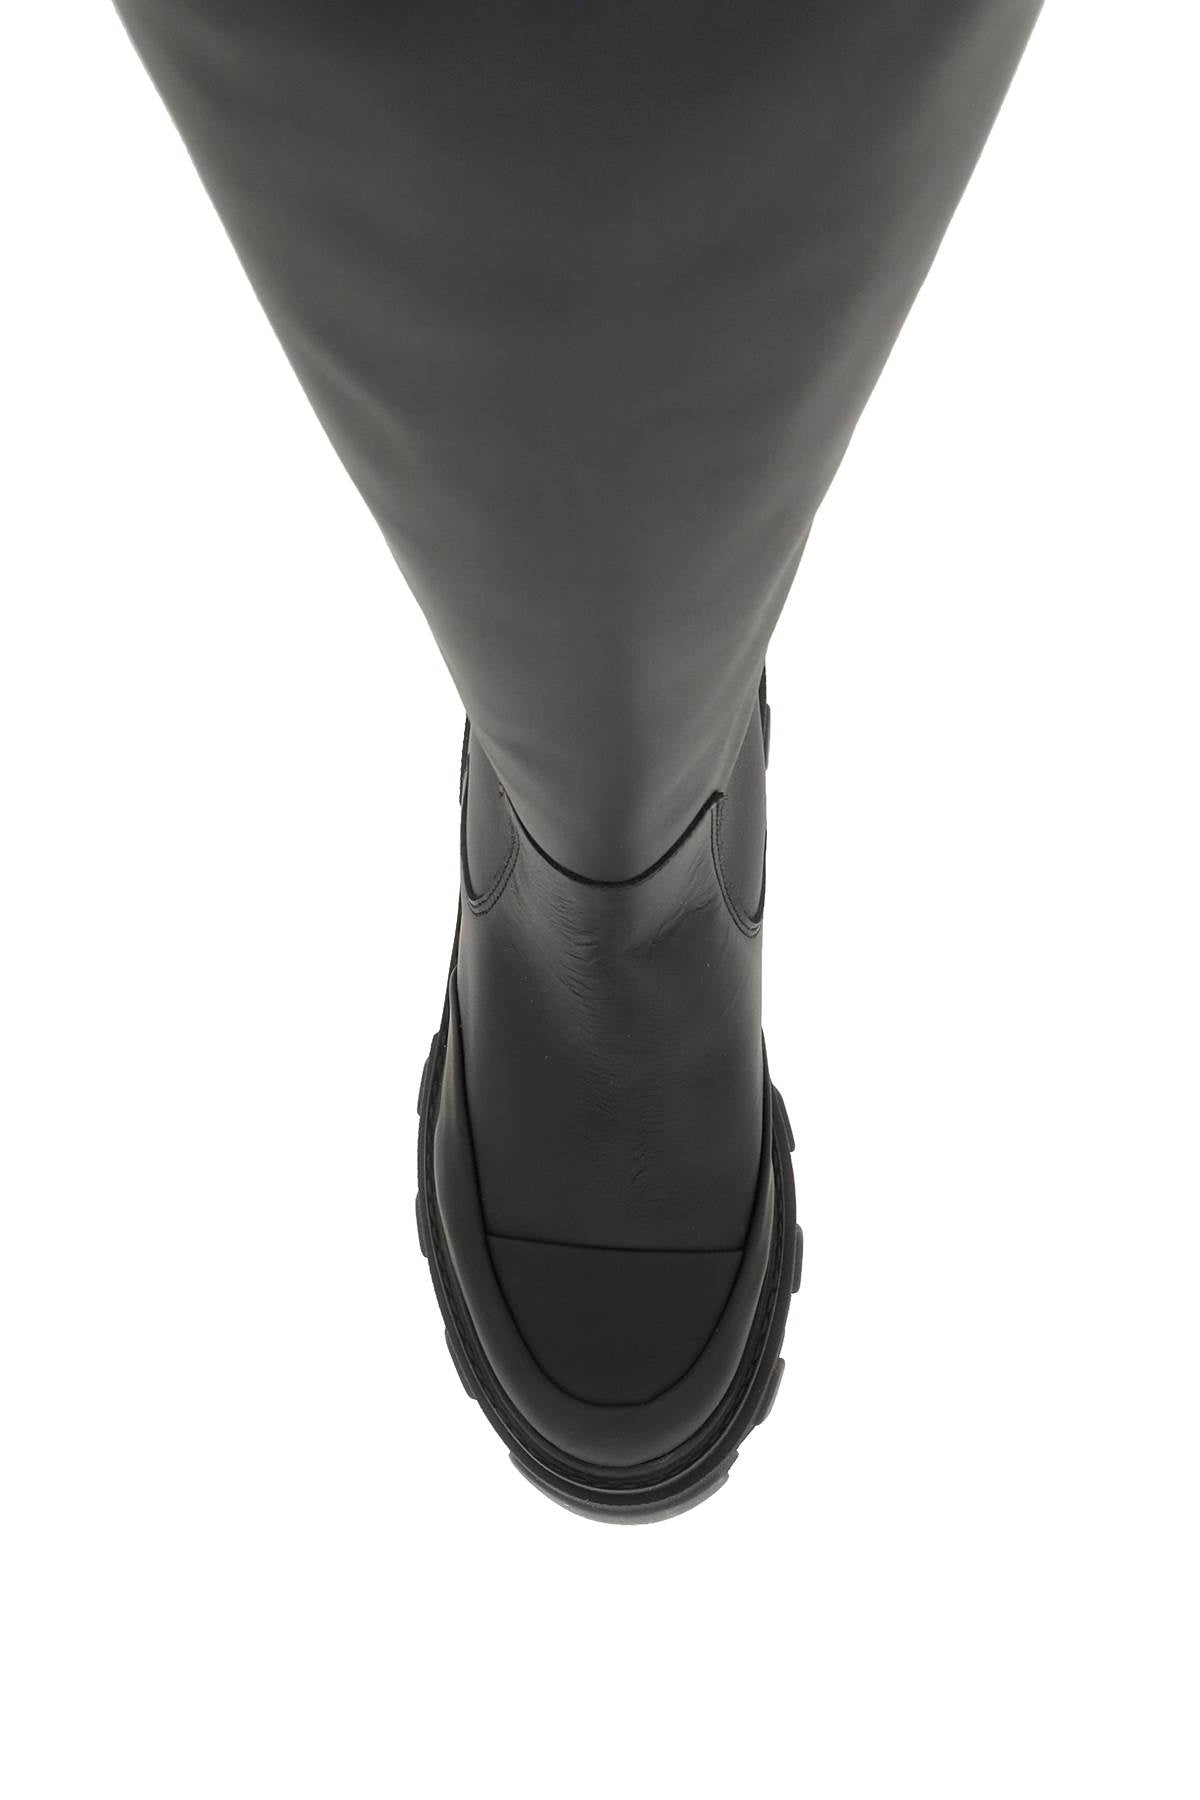 tubular leather boots-1